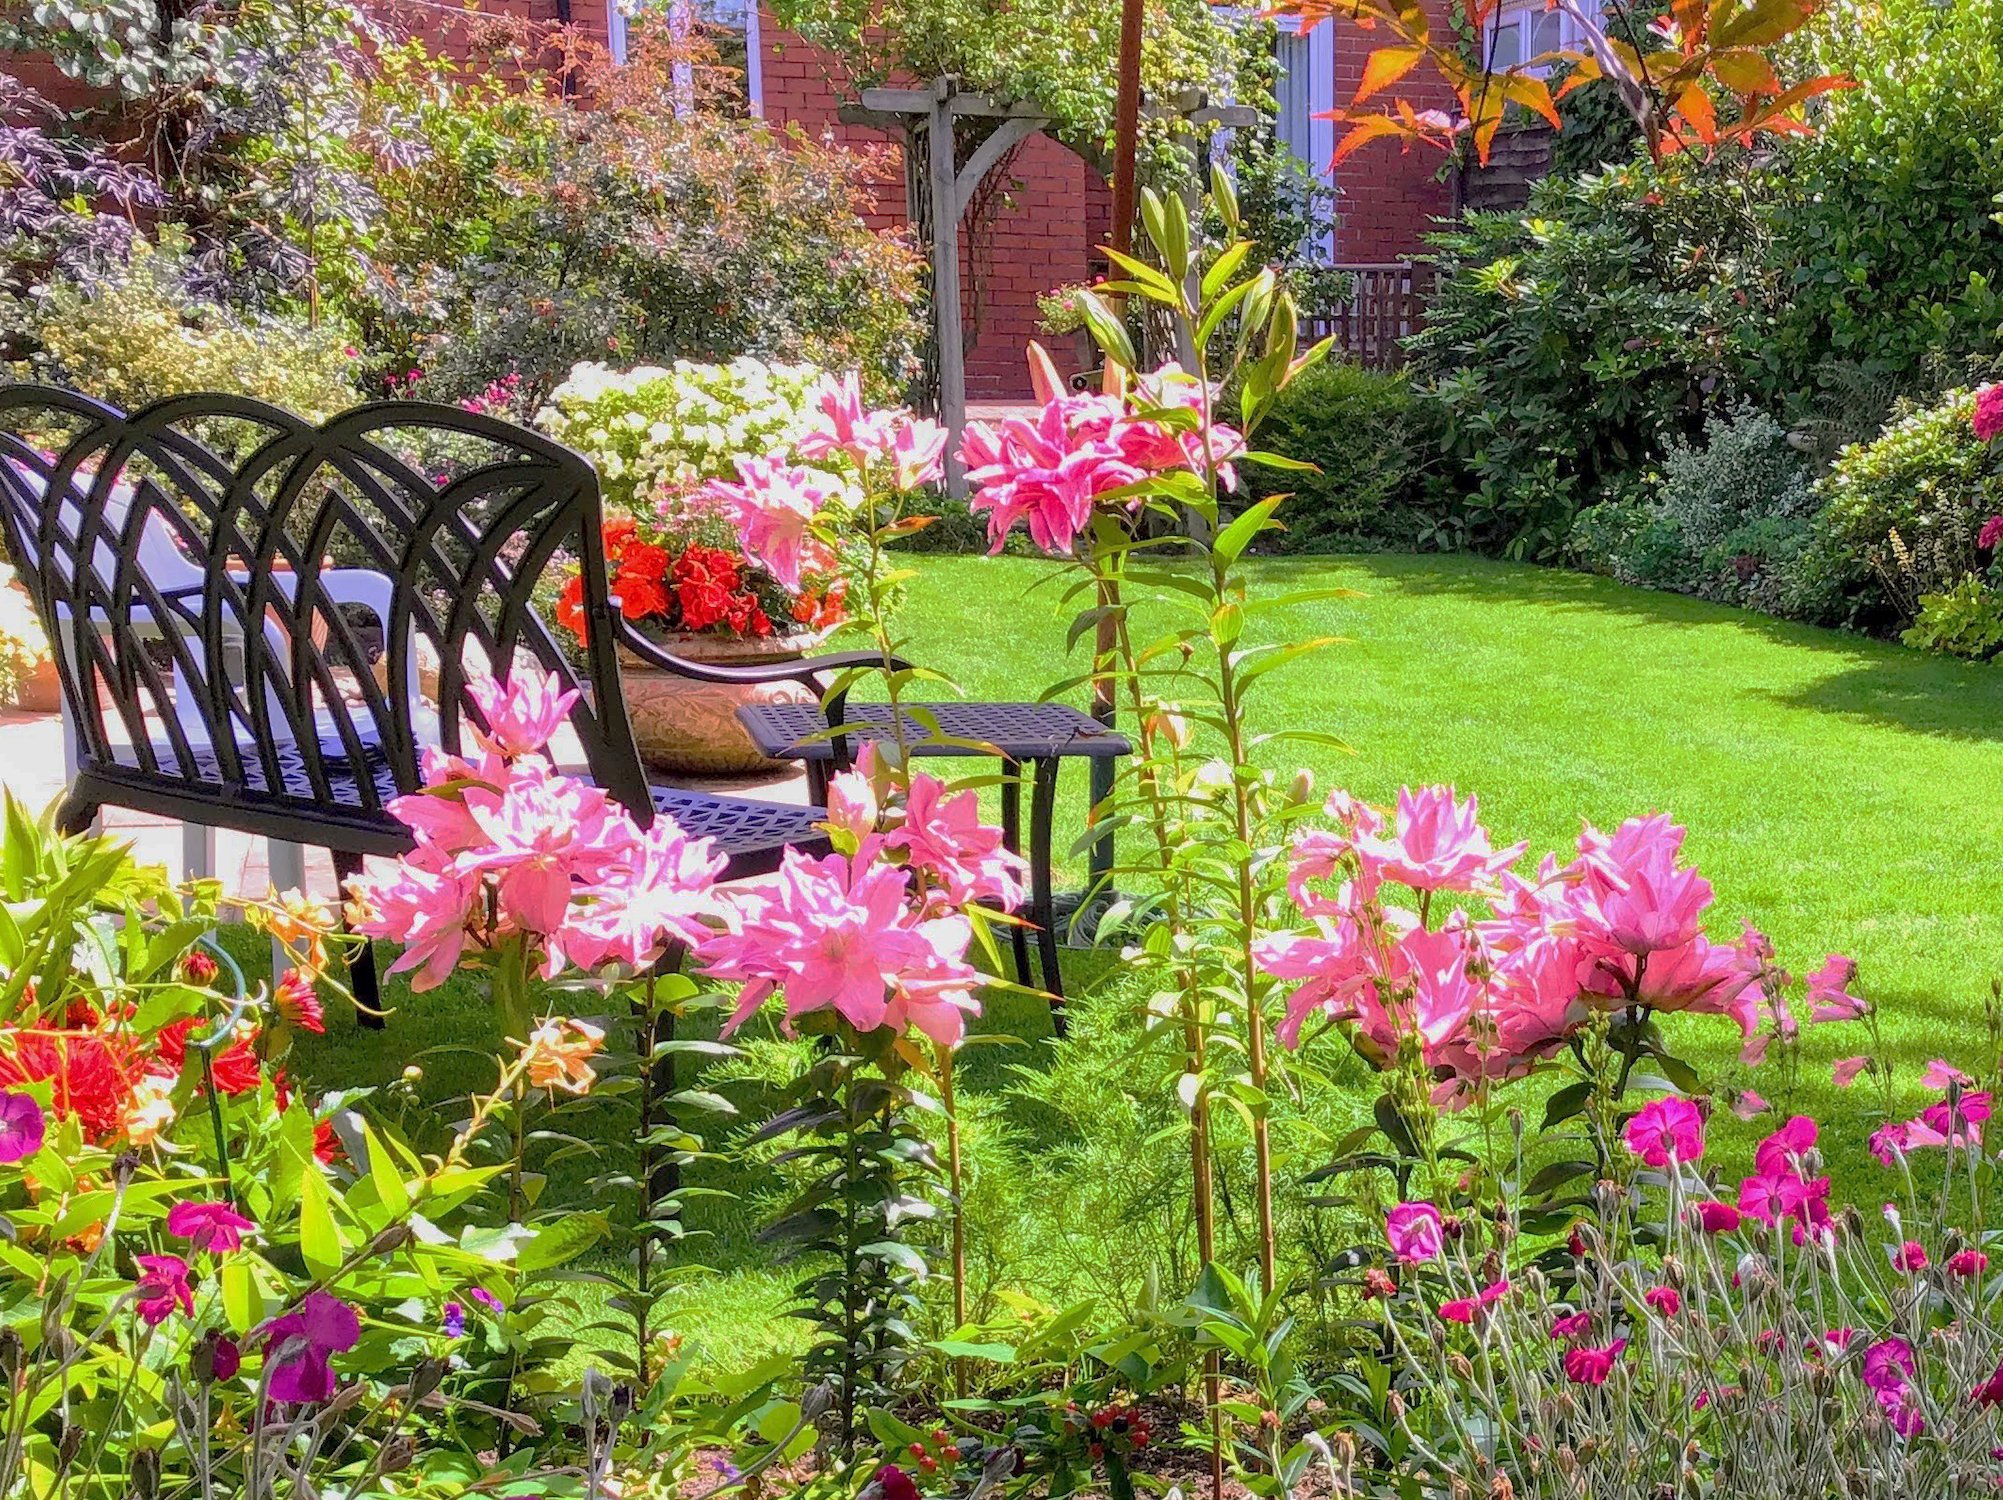 How do you create a quiet corner in your garden?